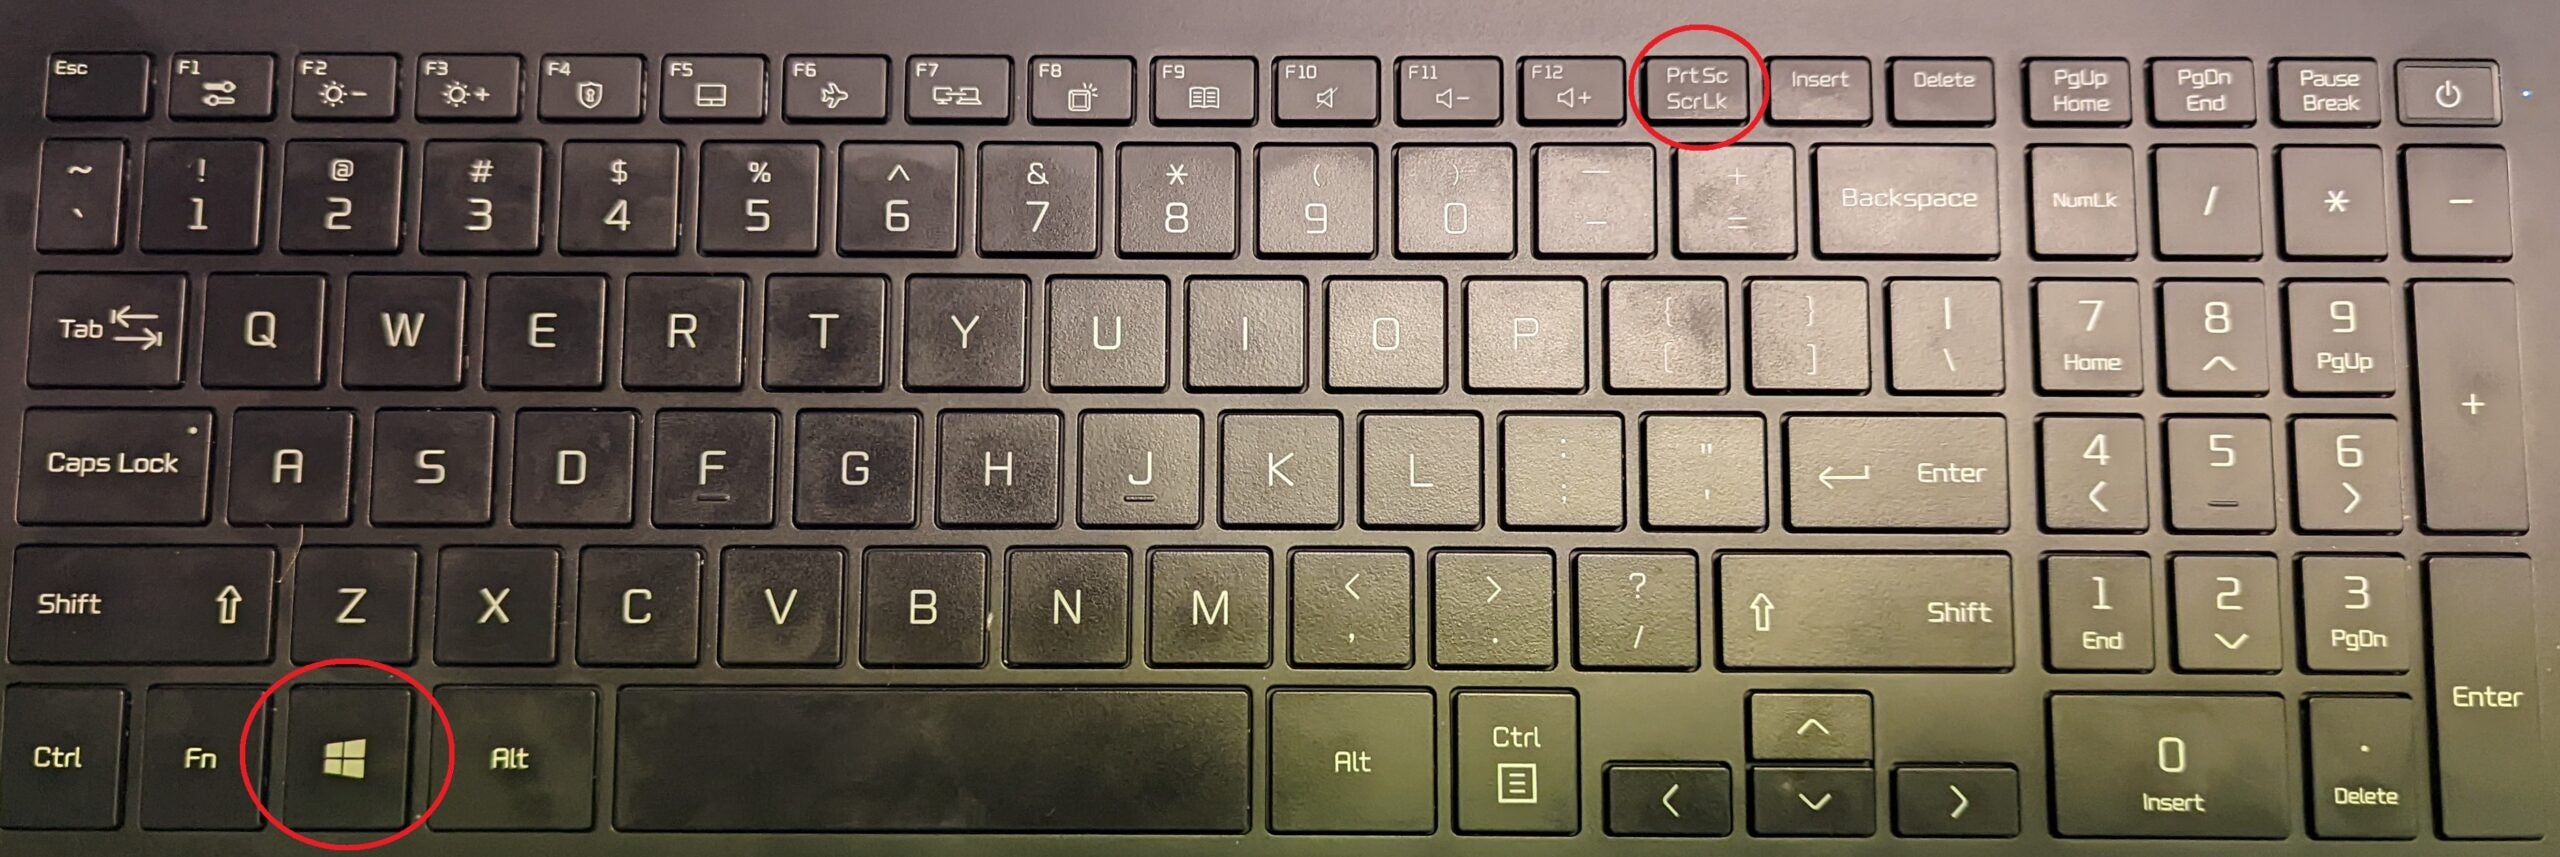 Keyboard shortcut 2 print screen